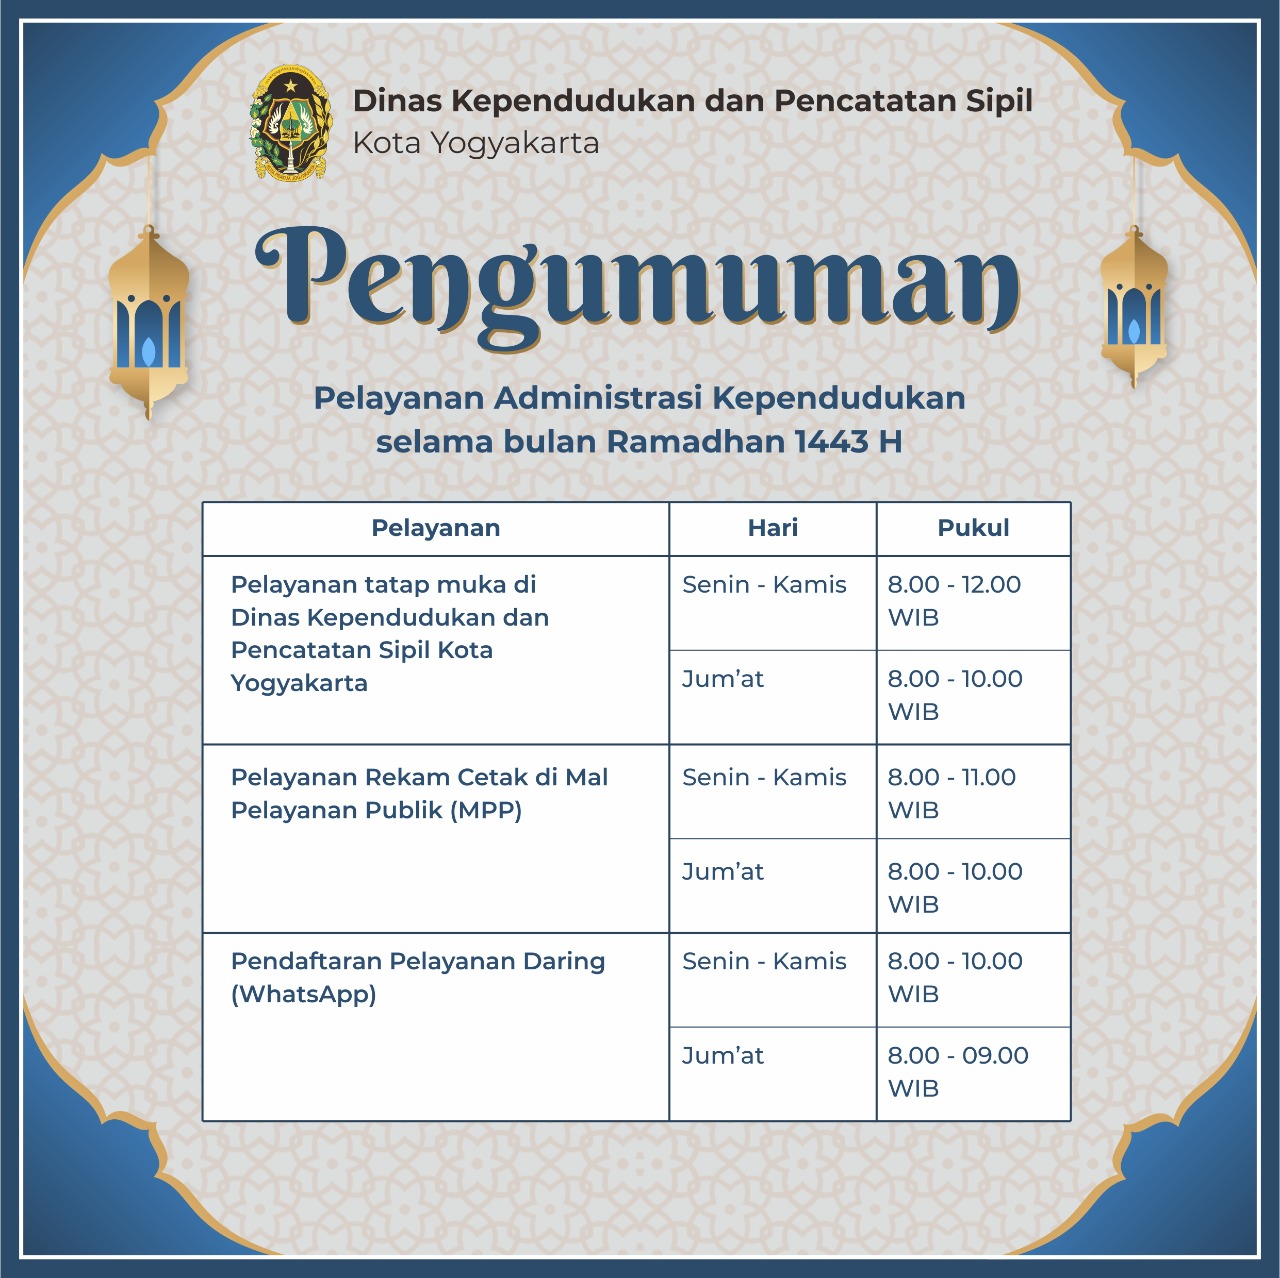 Informasi Jam Layanan Dinas Kependudukan Capil Kota Yk Selama Bulan Ramadhan 1443H